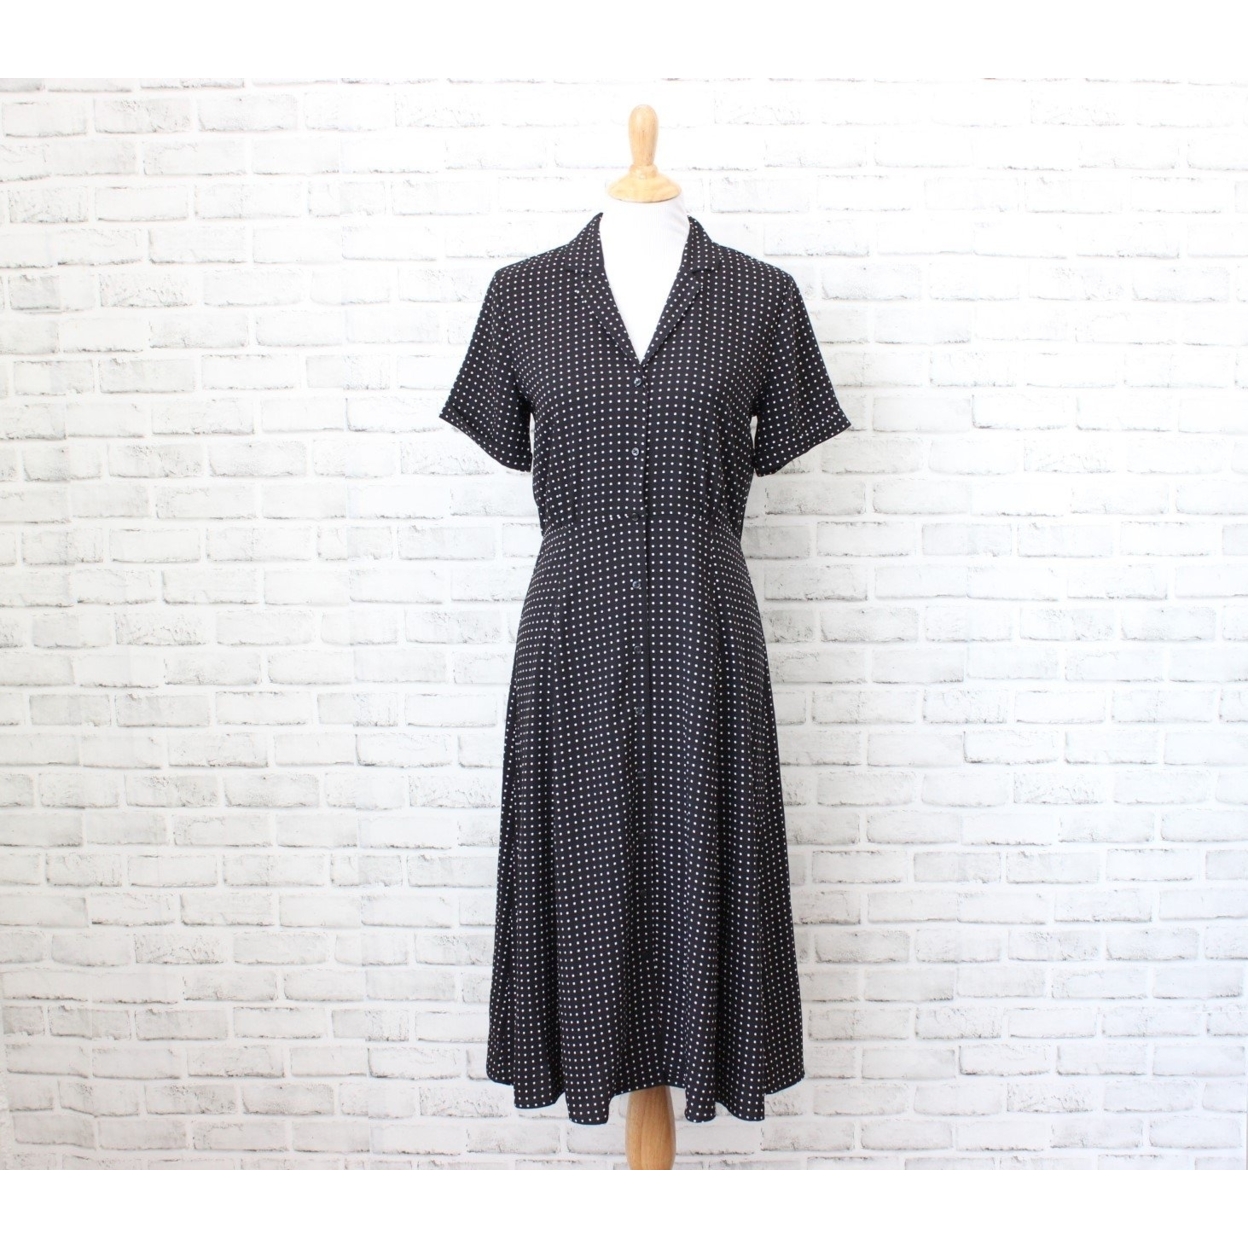 ANN TAYLOR Women's Short Sleeve Dress Black 4